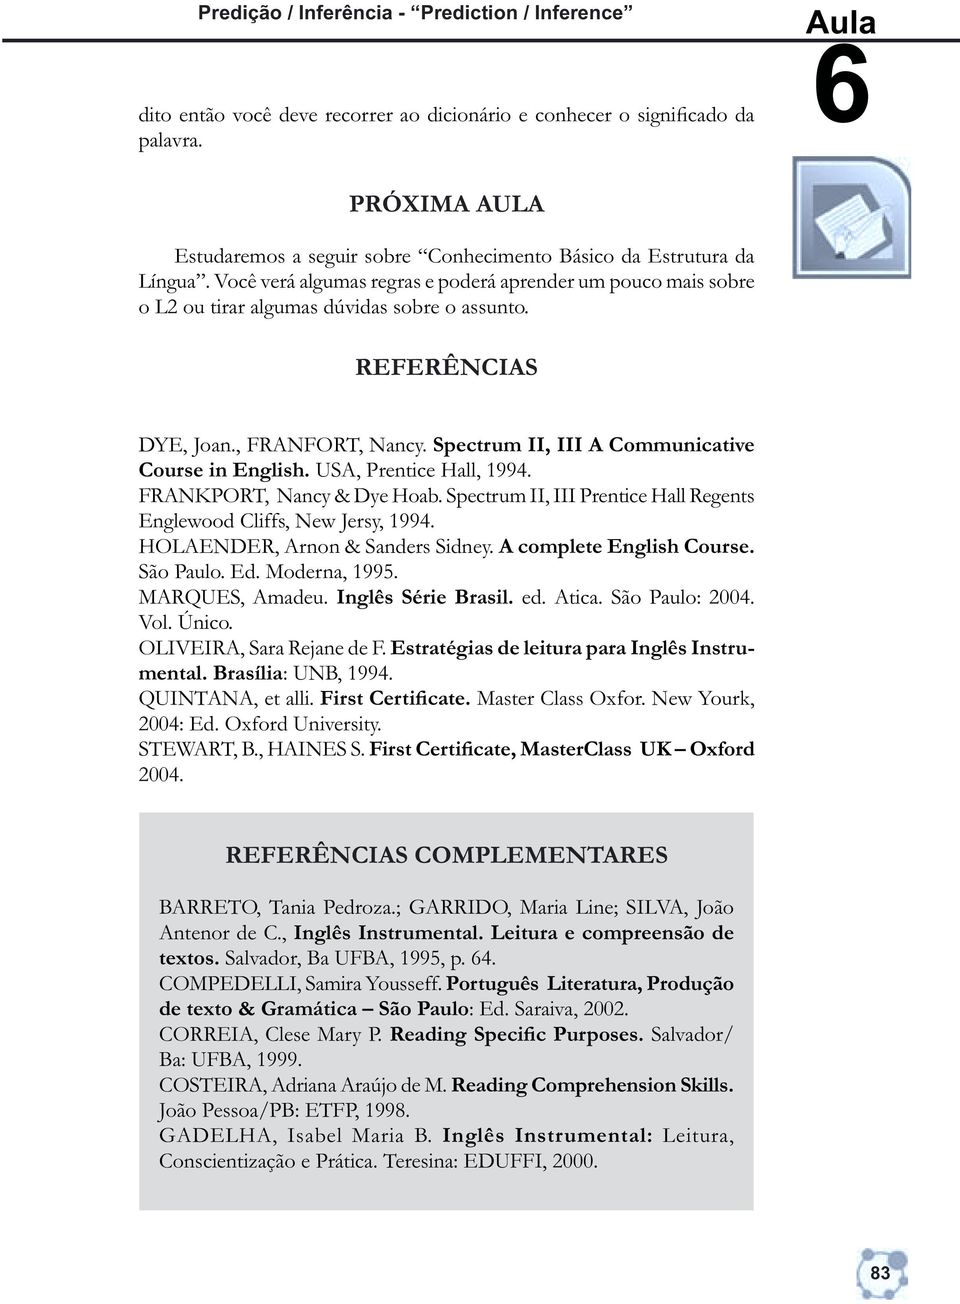 REFERÊNCIAS DYE, Joan., FRANFORT, Nancy. Spectrum II, III A Communicative Course in English. USA, Prentice Hall, 1994. FRANKPORT, Nancy & Dye Hoab.